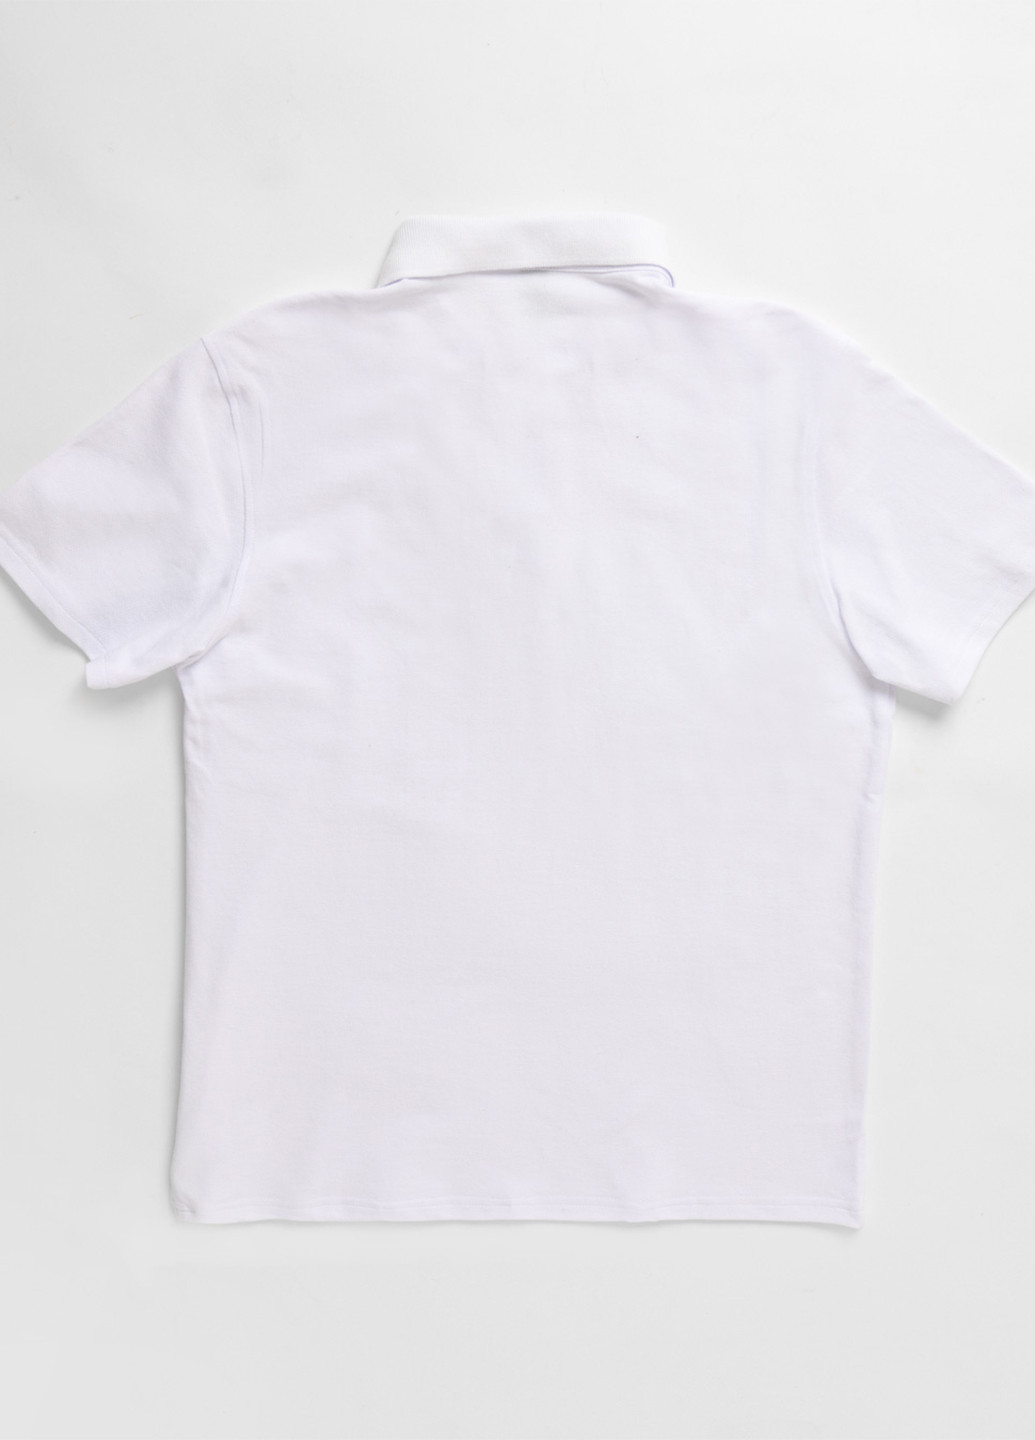 Белая футболка-поло для мужчин CRC однотонная